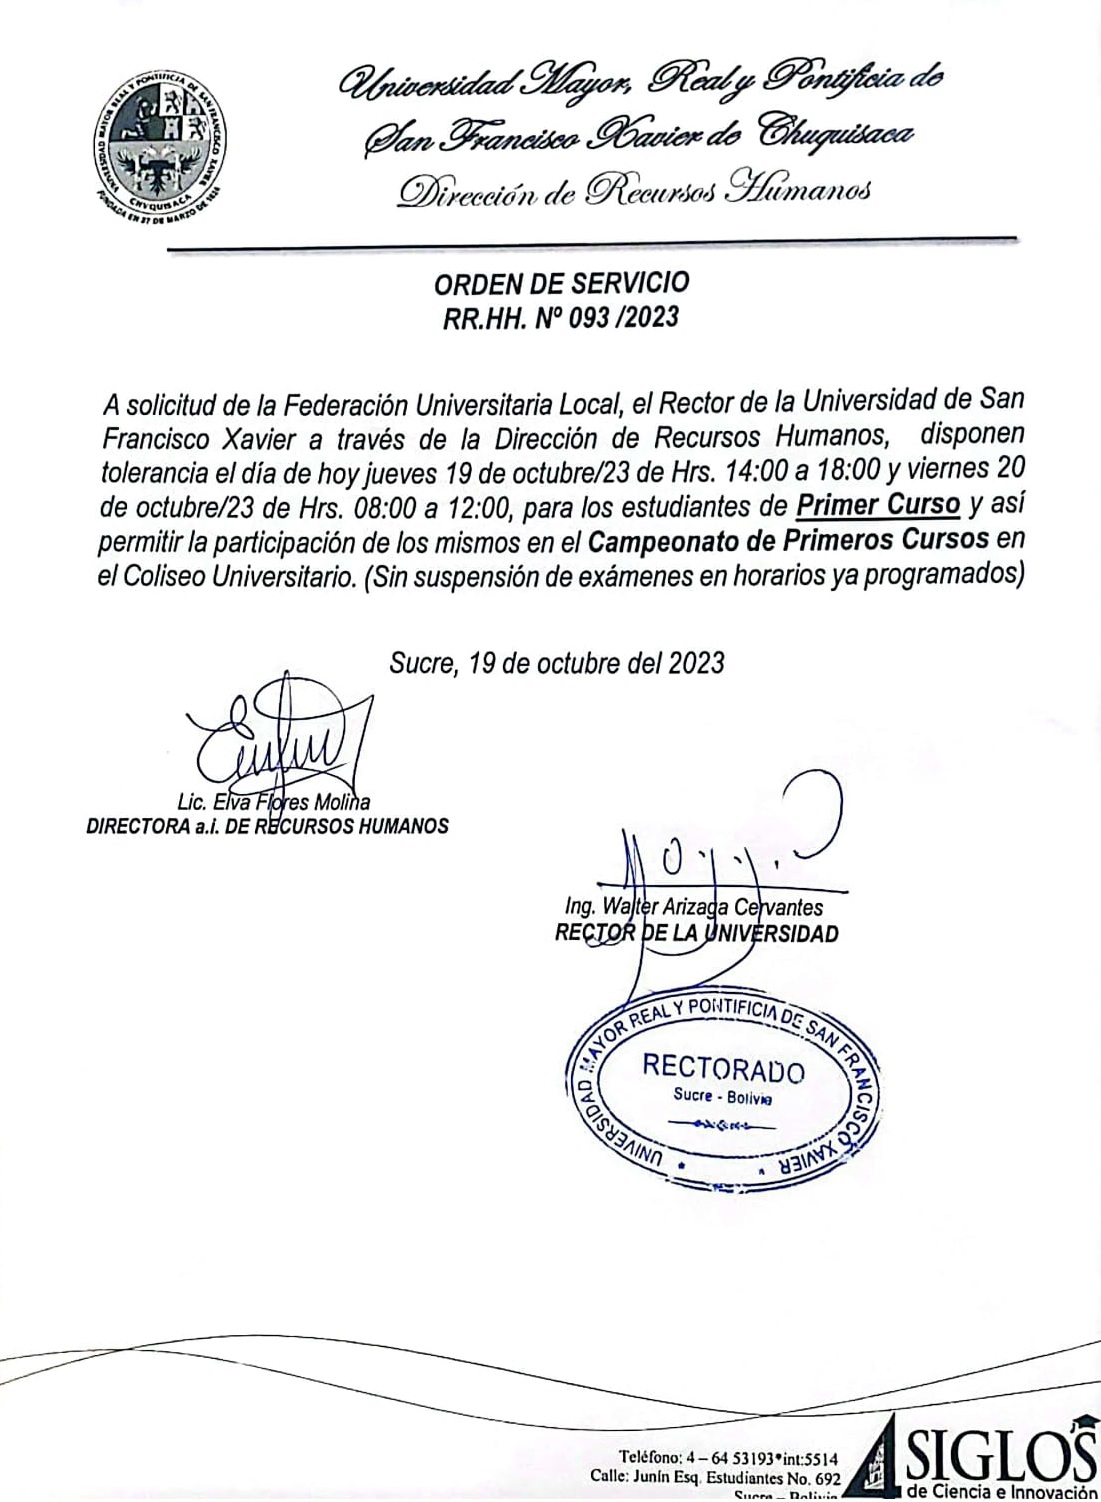 ORDEN DE SERVICIO RR.HH. Nº 093/2023, TOLERANCIA ACTIVIDADES ACADÉMICAS CAMPEONATO FUL.